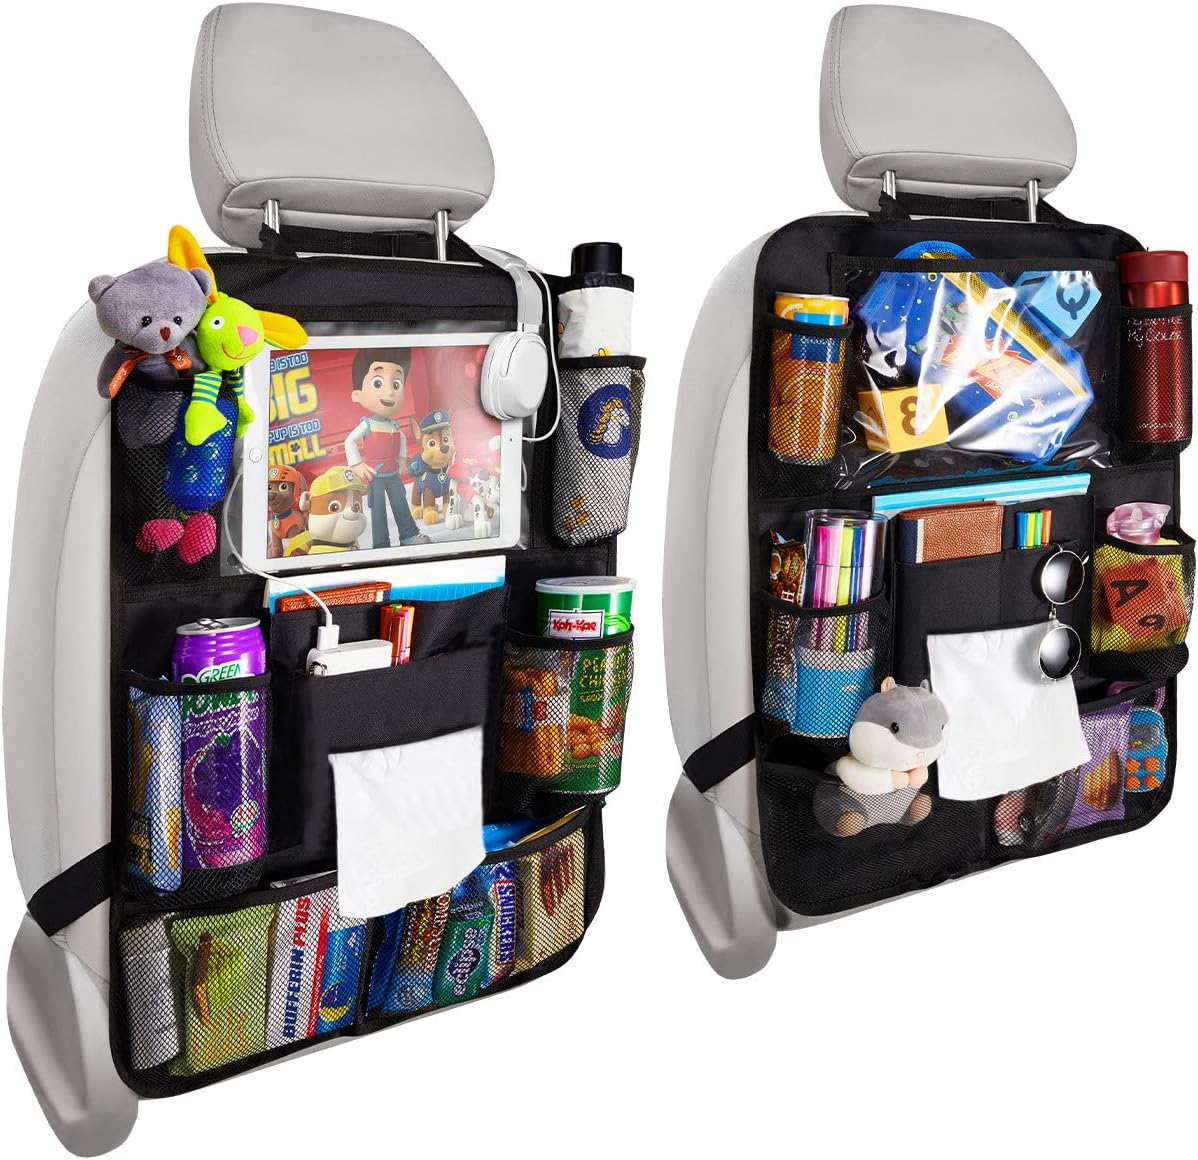 Car Backseat Organizer v2 with Tablet Holder, Tissue Box, 8